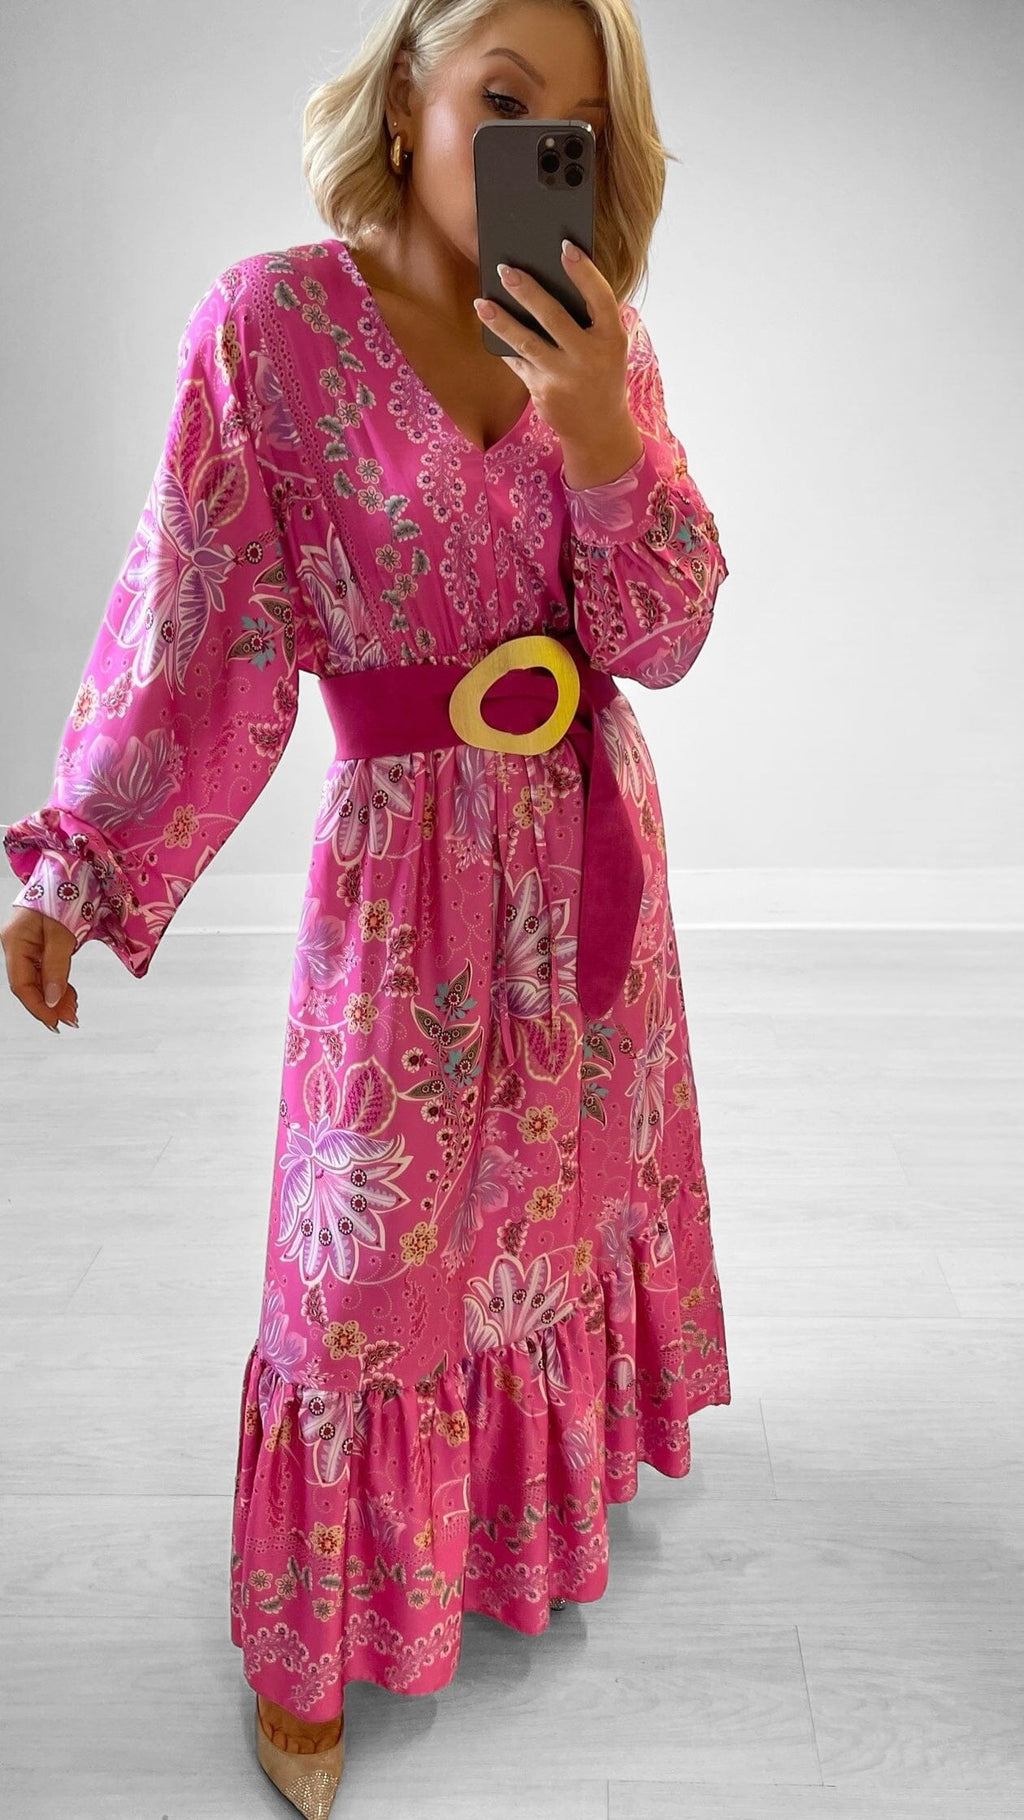 COIRLÉ SILKY DRESS & BELT Coco Boutique Pink One Size 